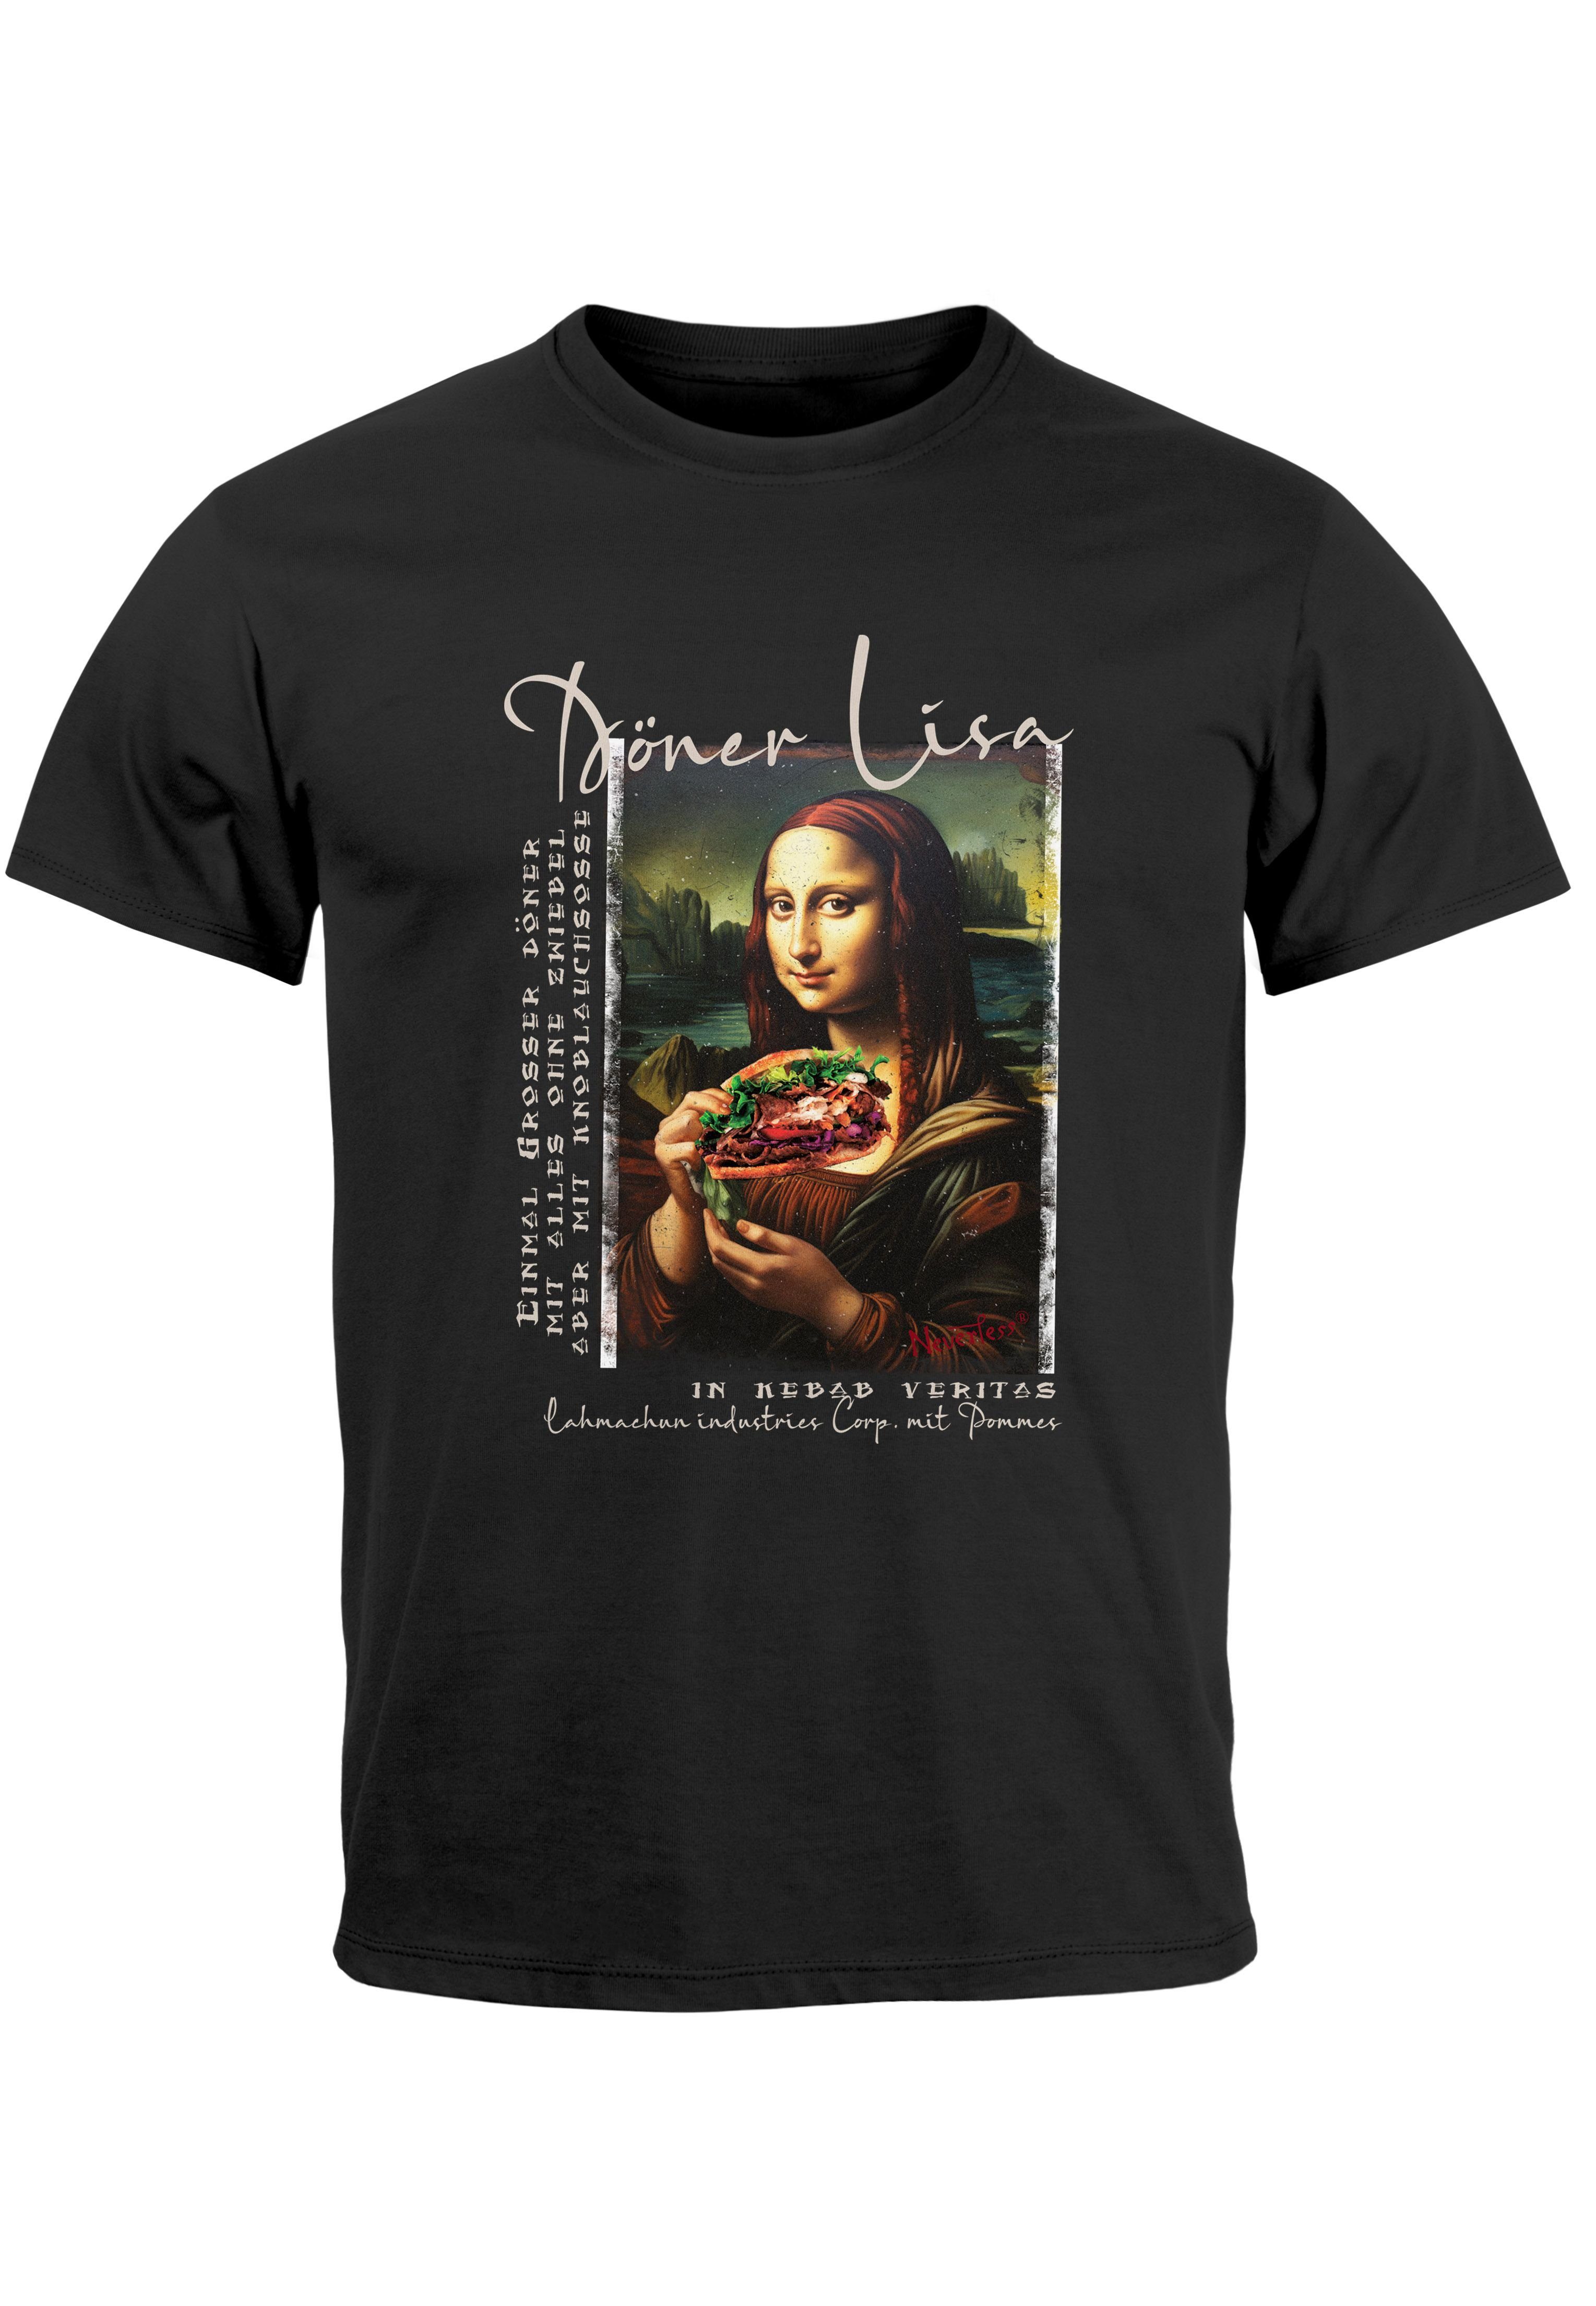 MoonWorks Print-Shirt Herren T-Shirt Print Aufdruck Mona Lisa Parodie Meme Kapuzen-Pullover mit Print Döner Lisa schwarz